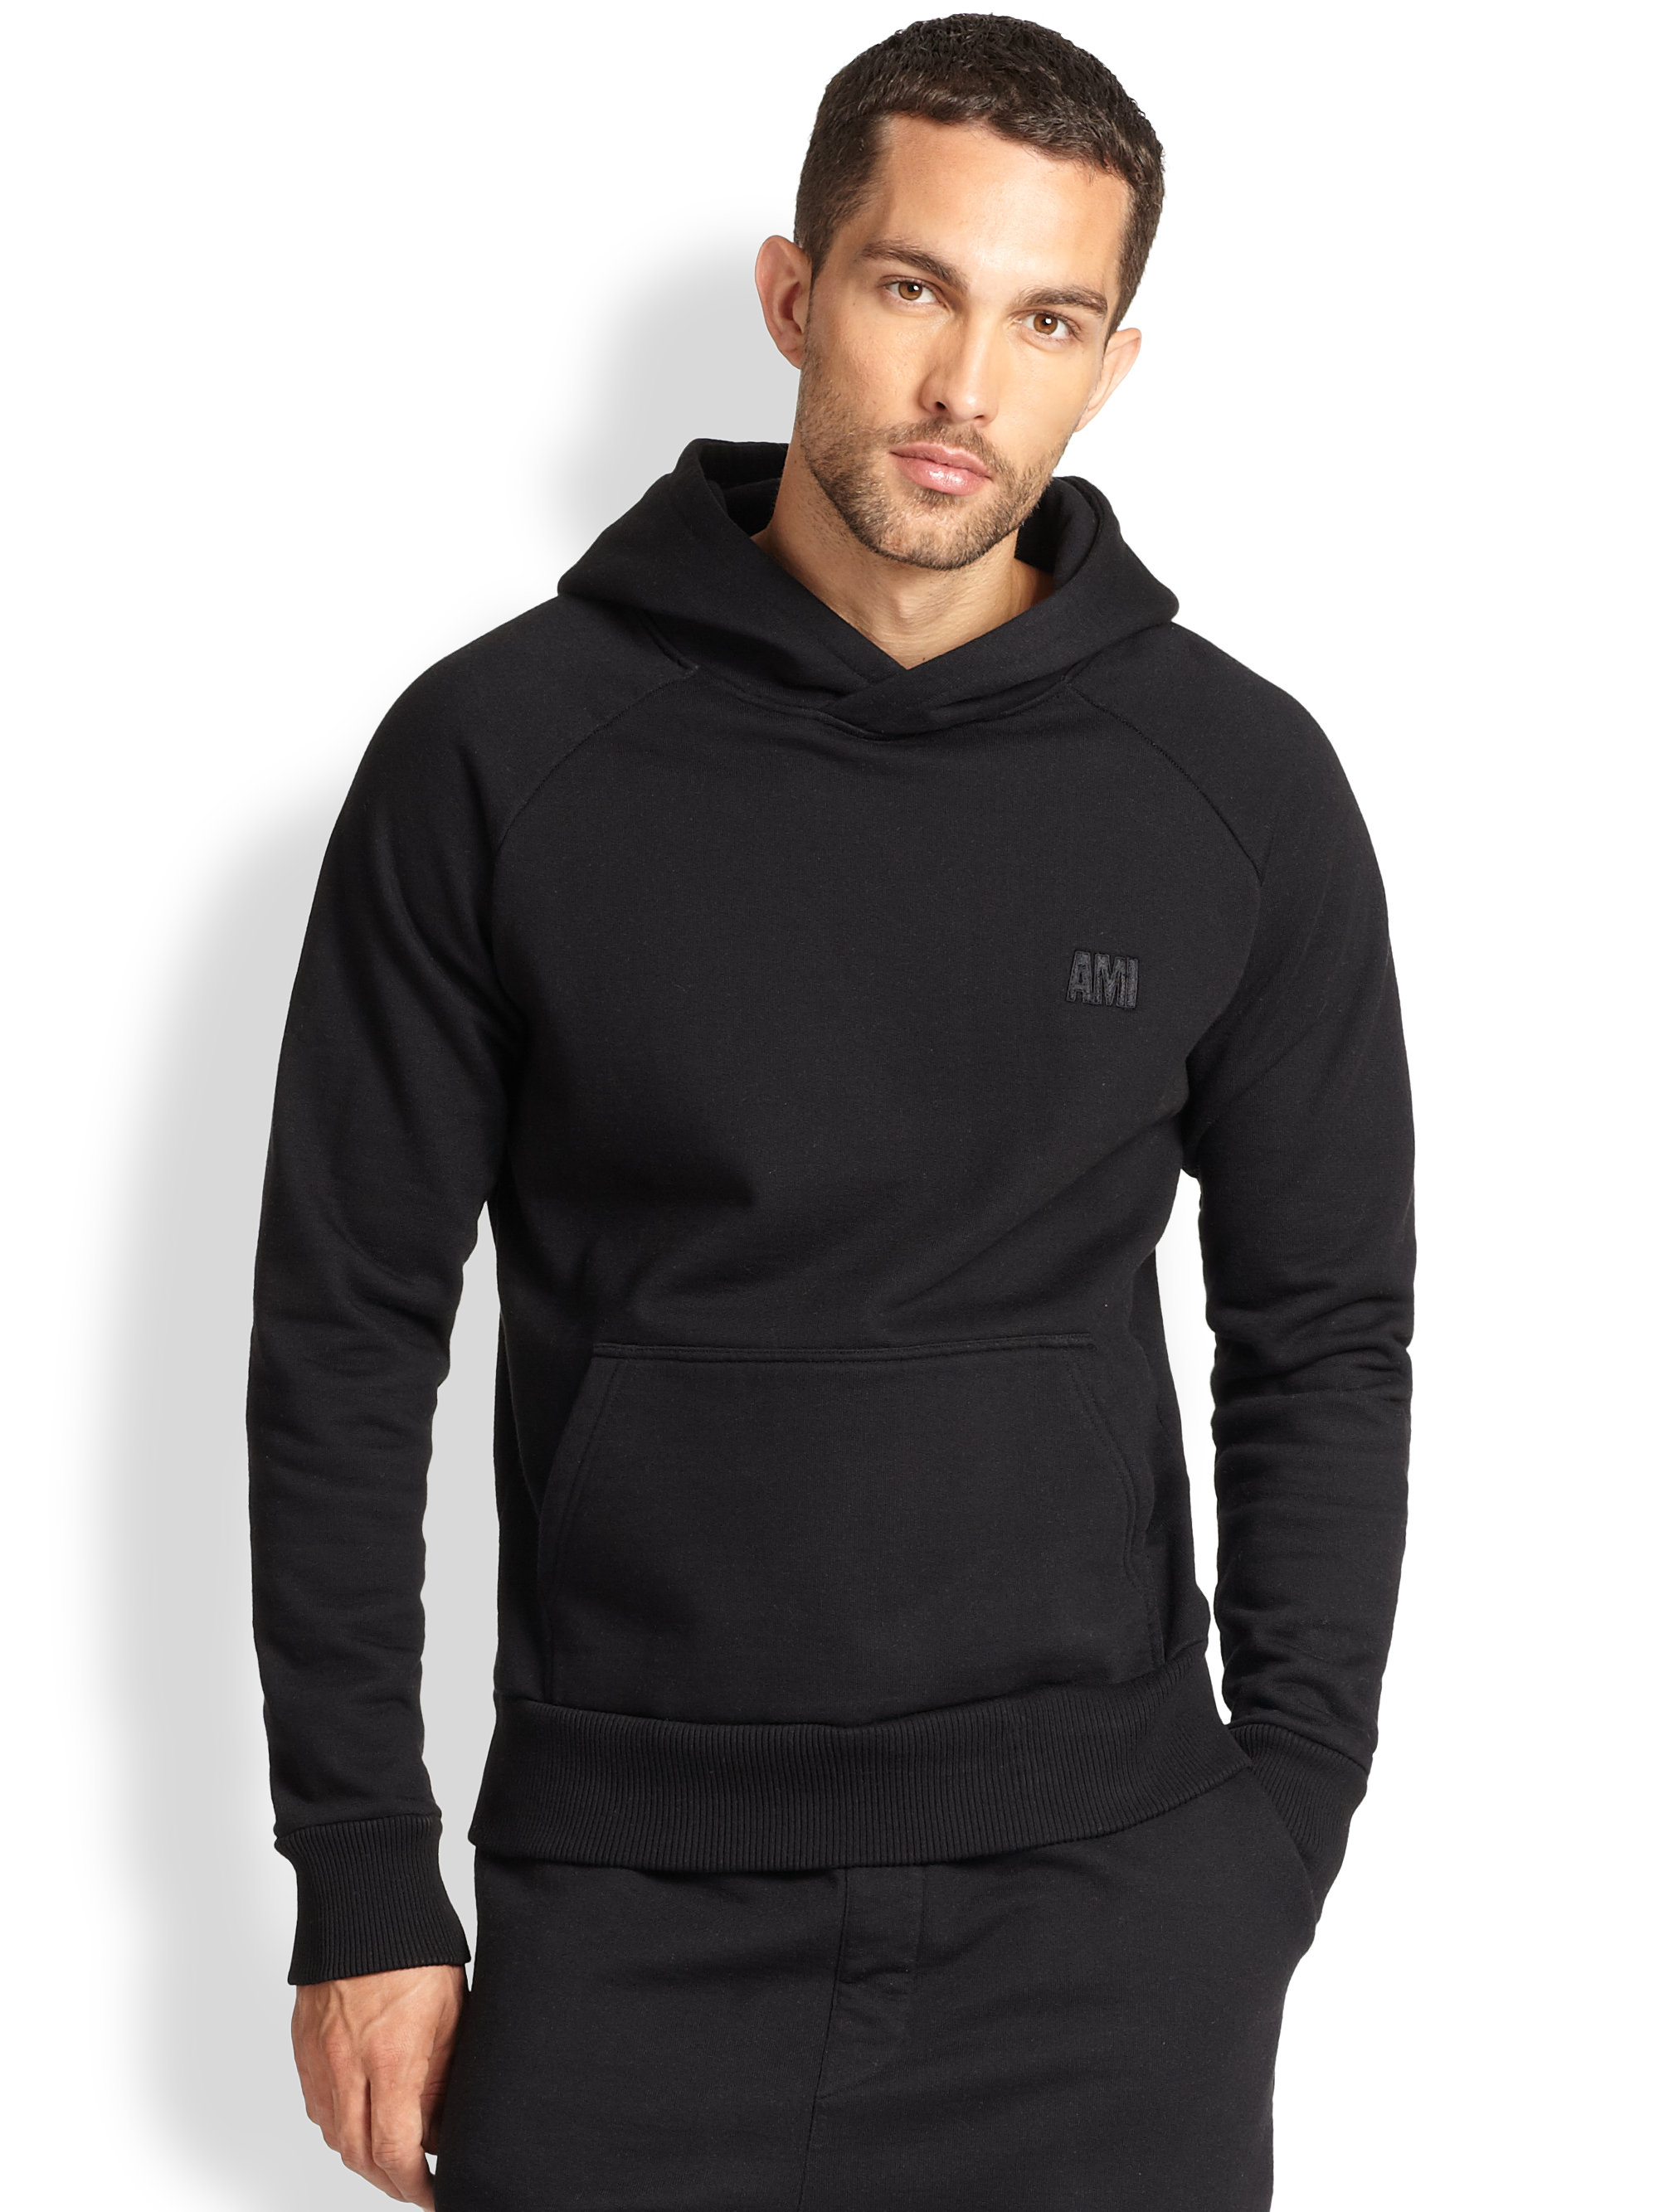 AMI Hooded Sweatshirt in Black for Men - Lyst